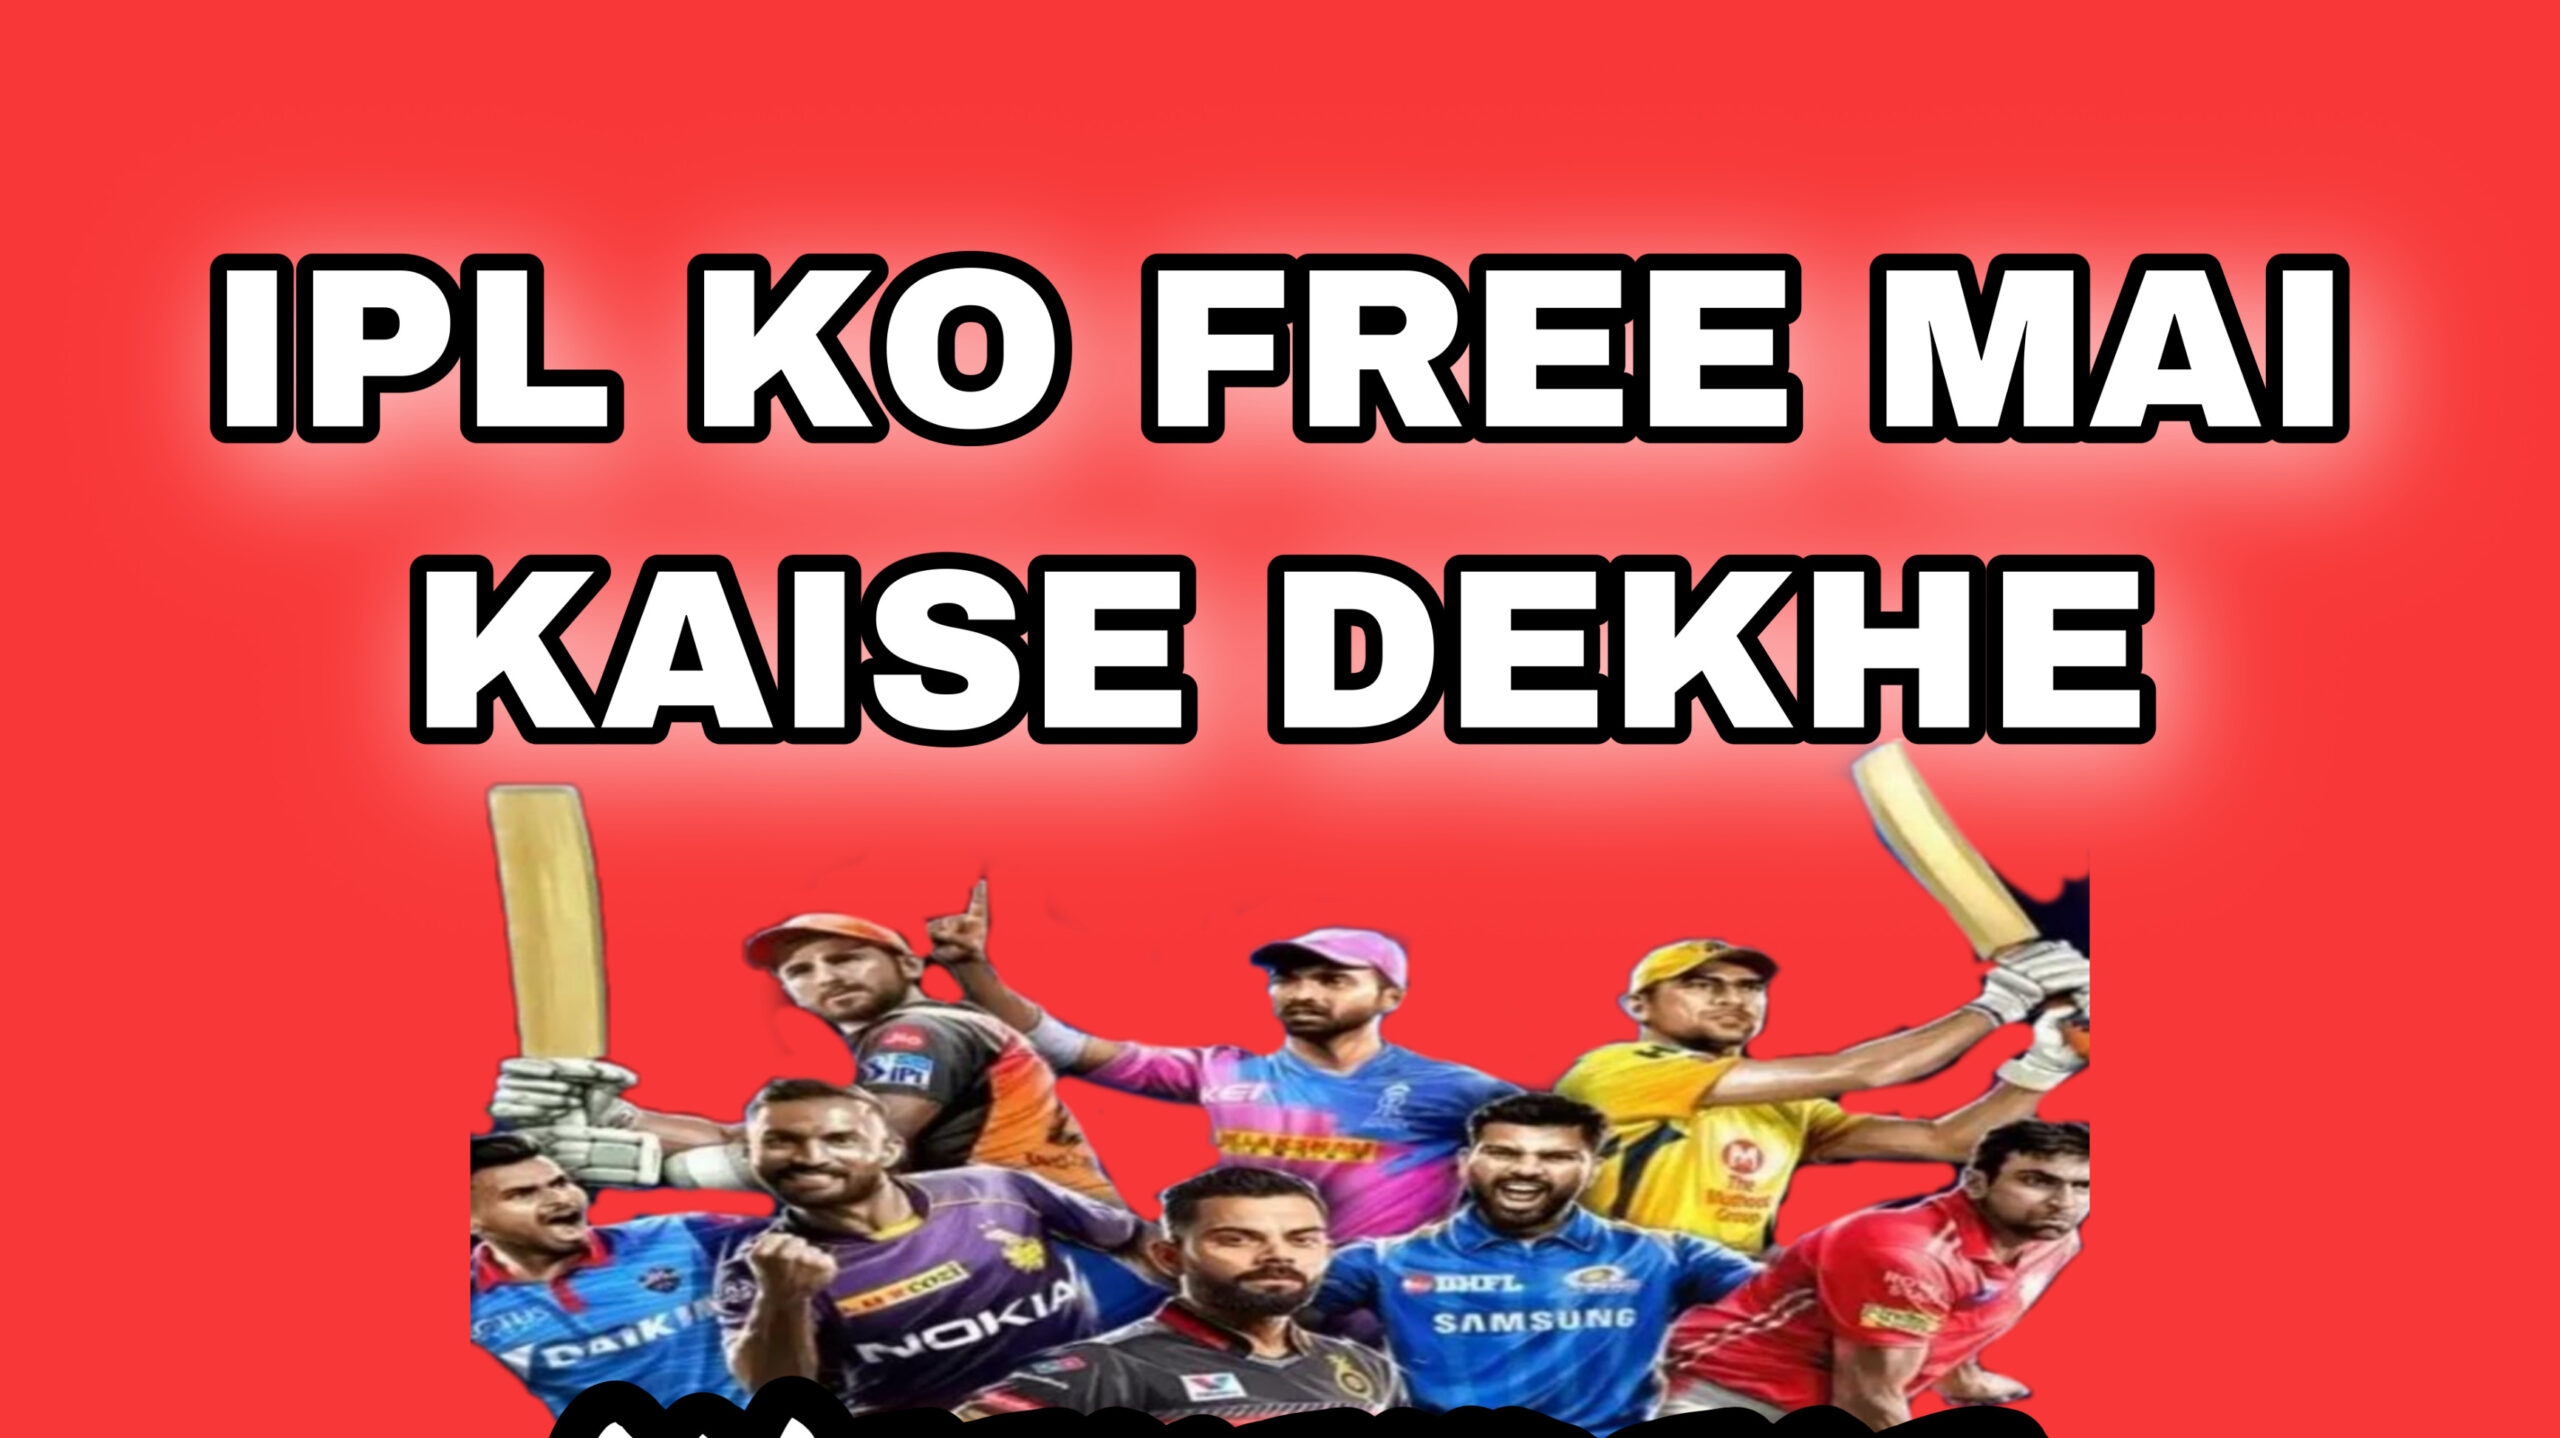 Free IPL Dekhne Wala App